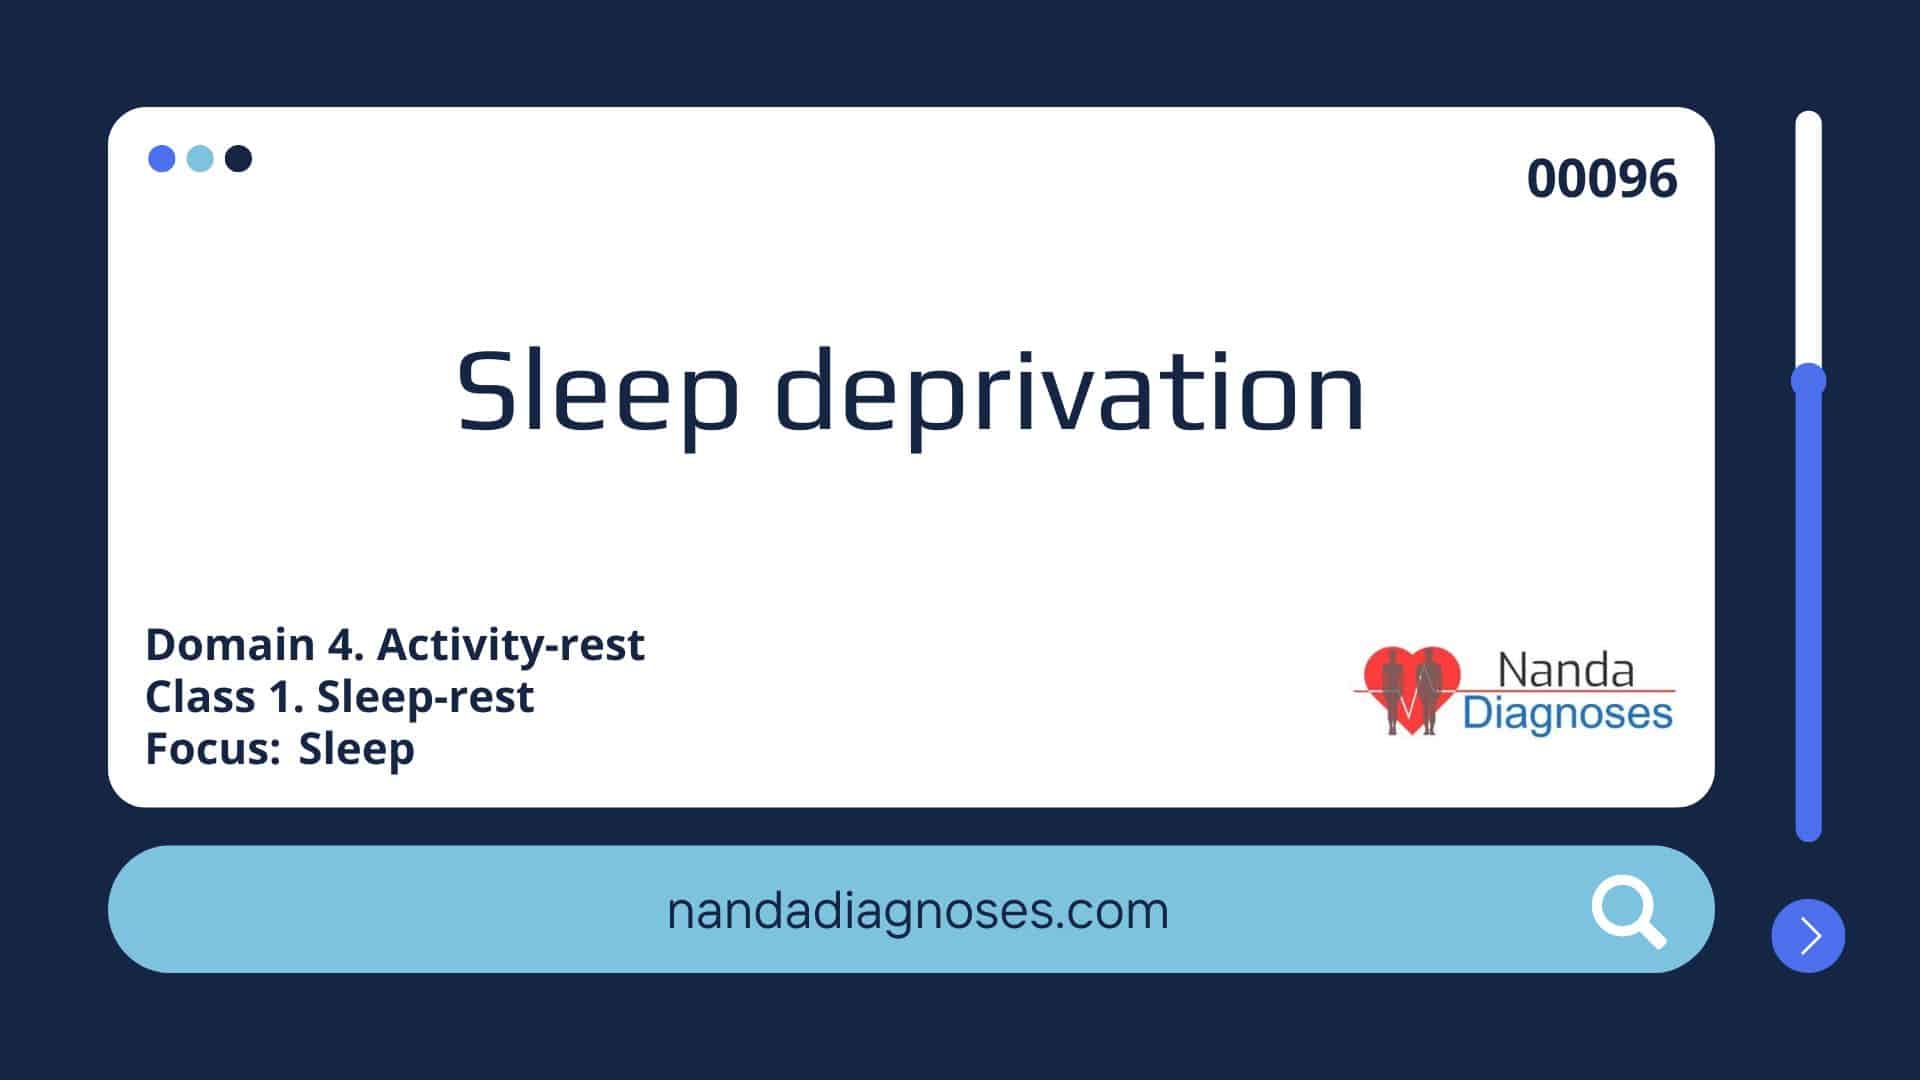 Nursing diagnosis Sleep deprivation